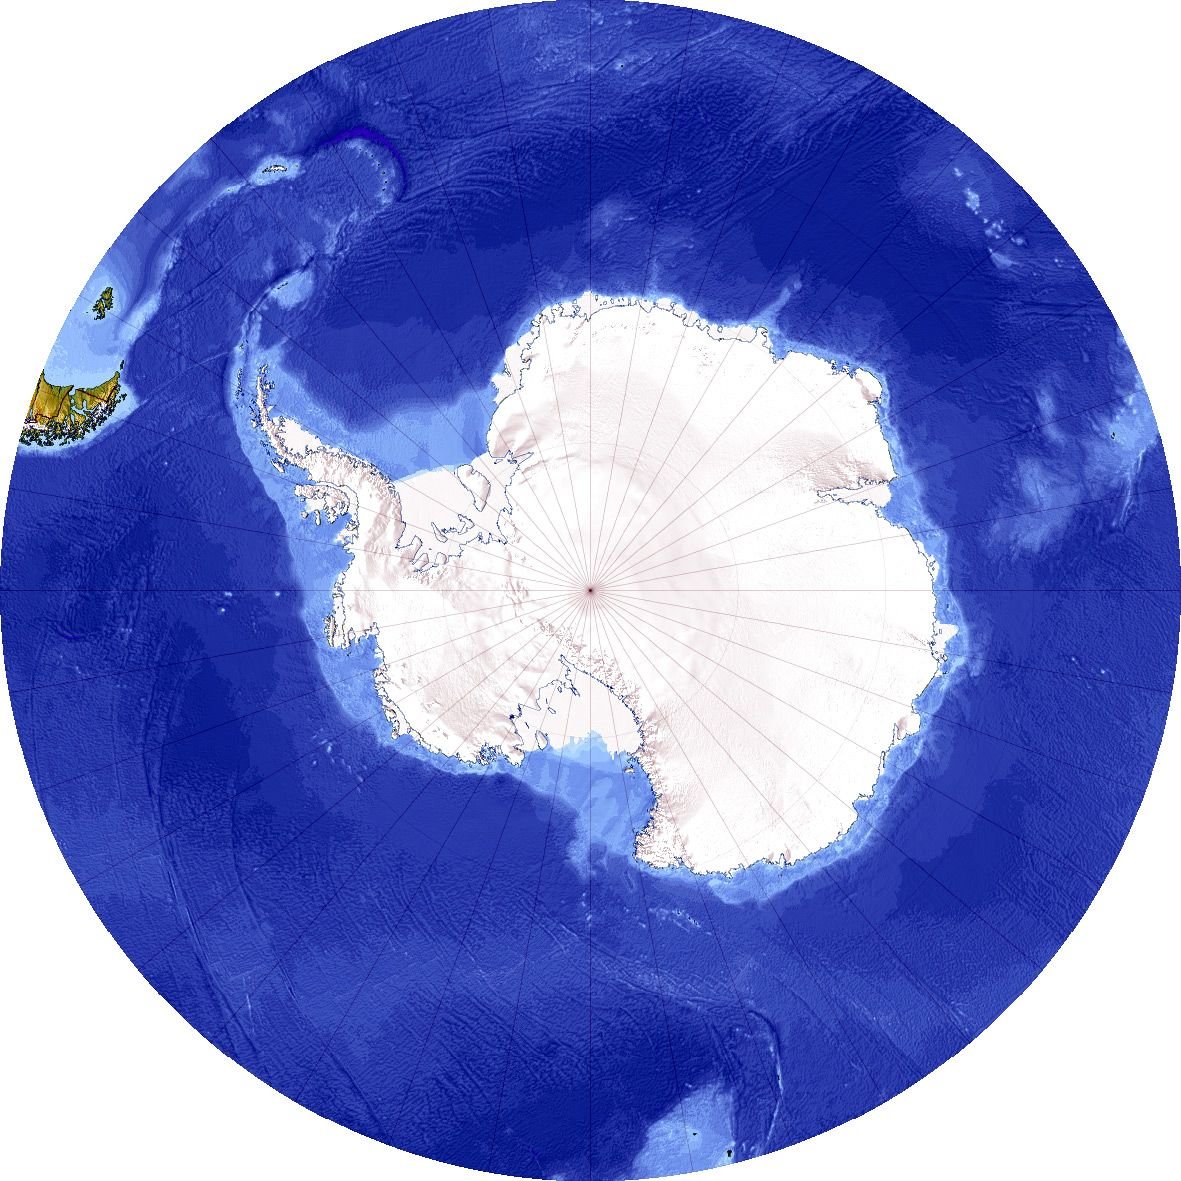 Антарктические полюса. Антарктида (материк). Антарктика на карте. Южный полюс на карте Антарктиды. Южный полюс Антарктида материк карта.